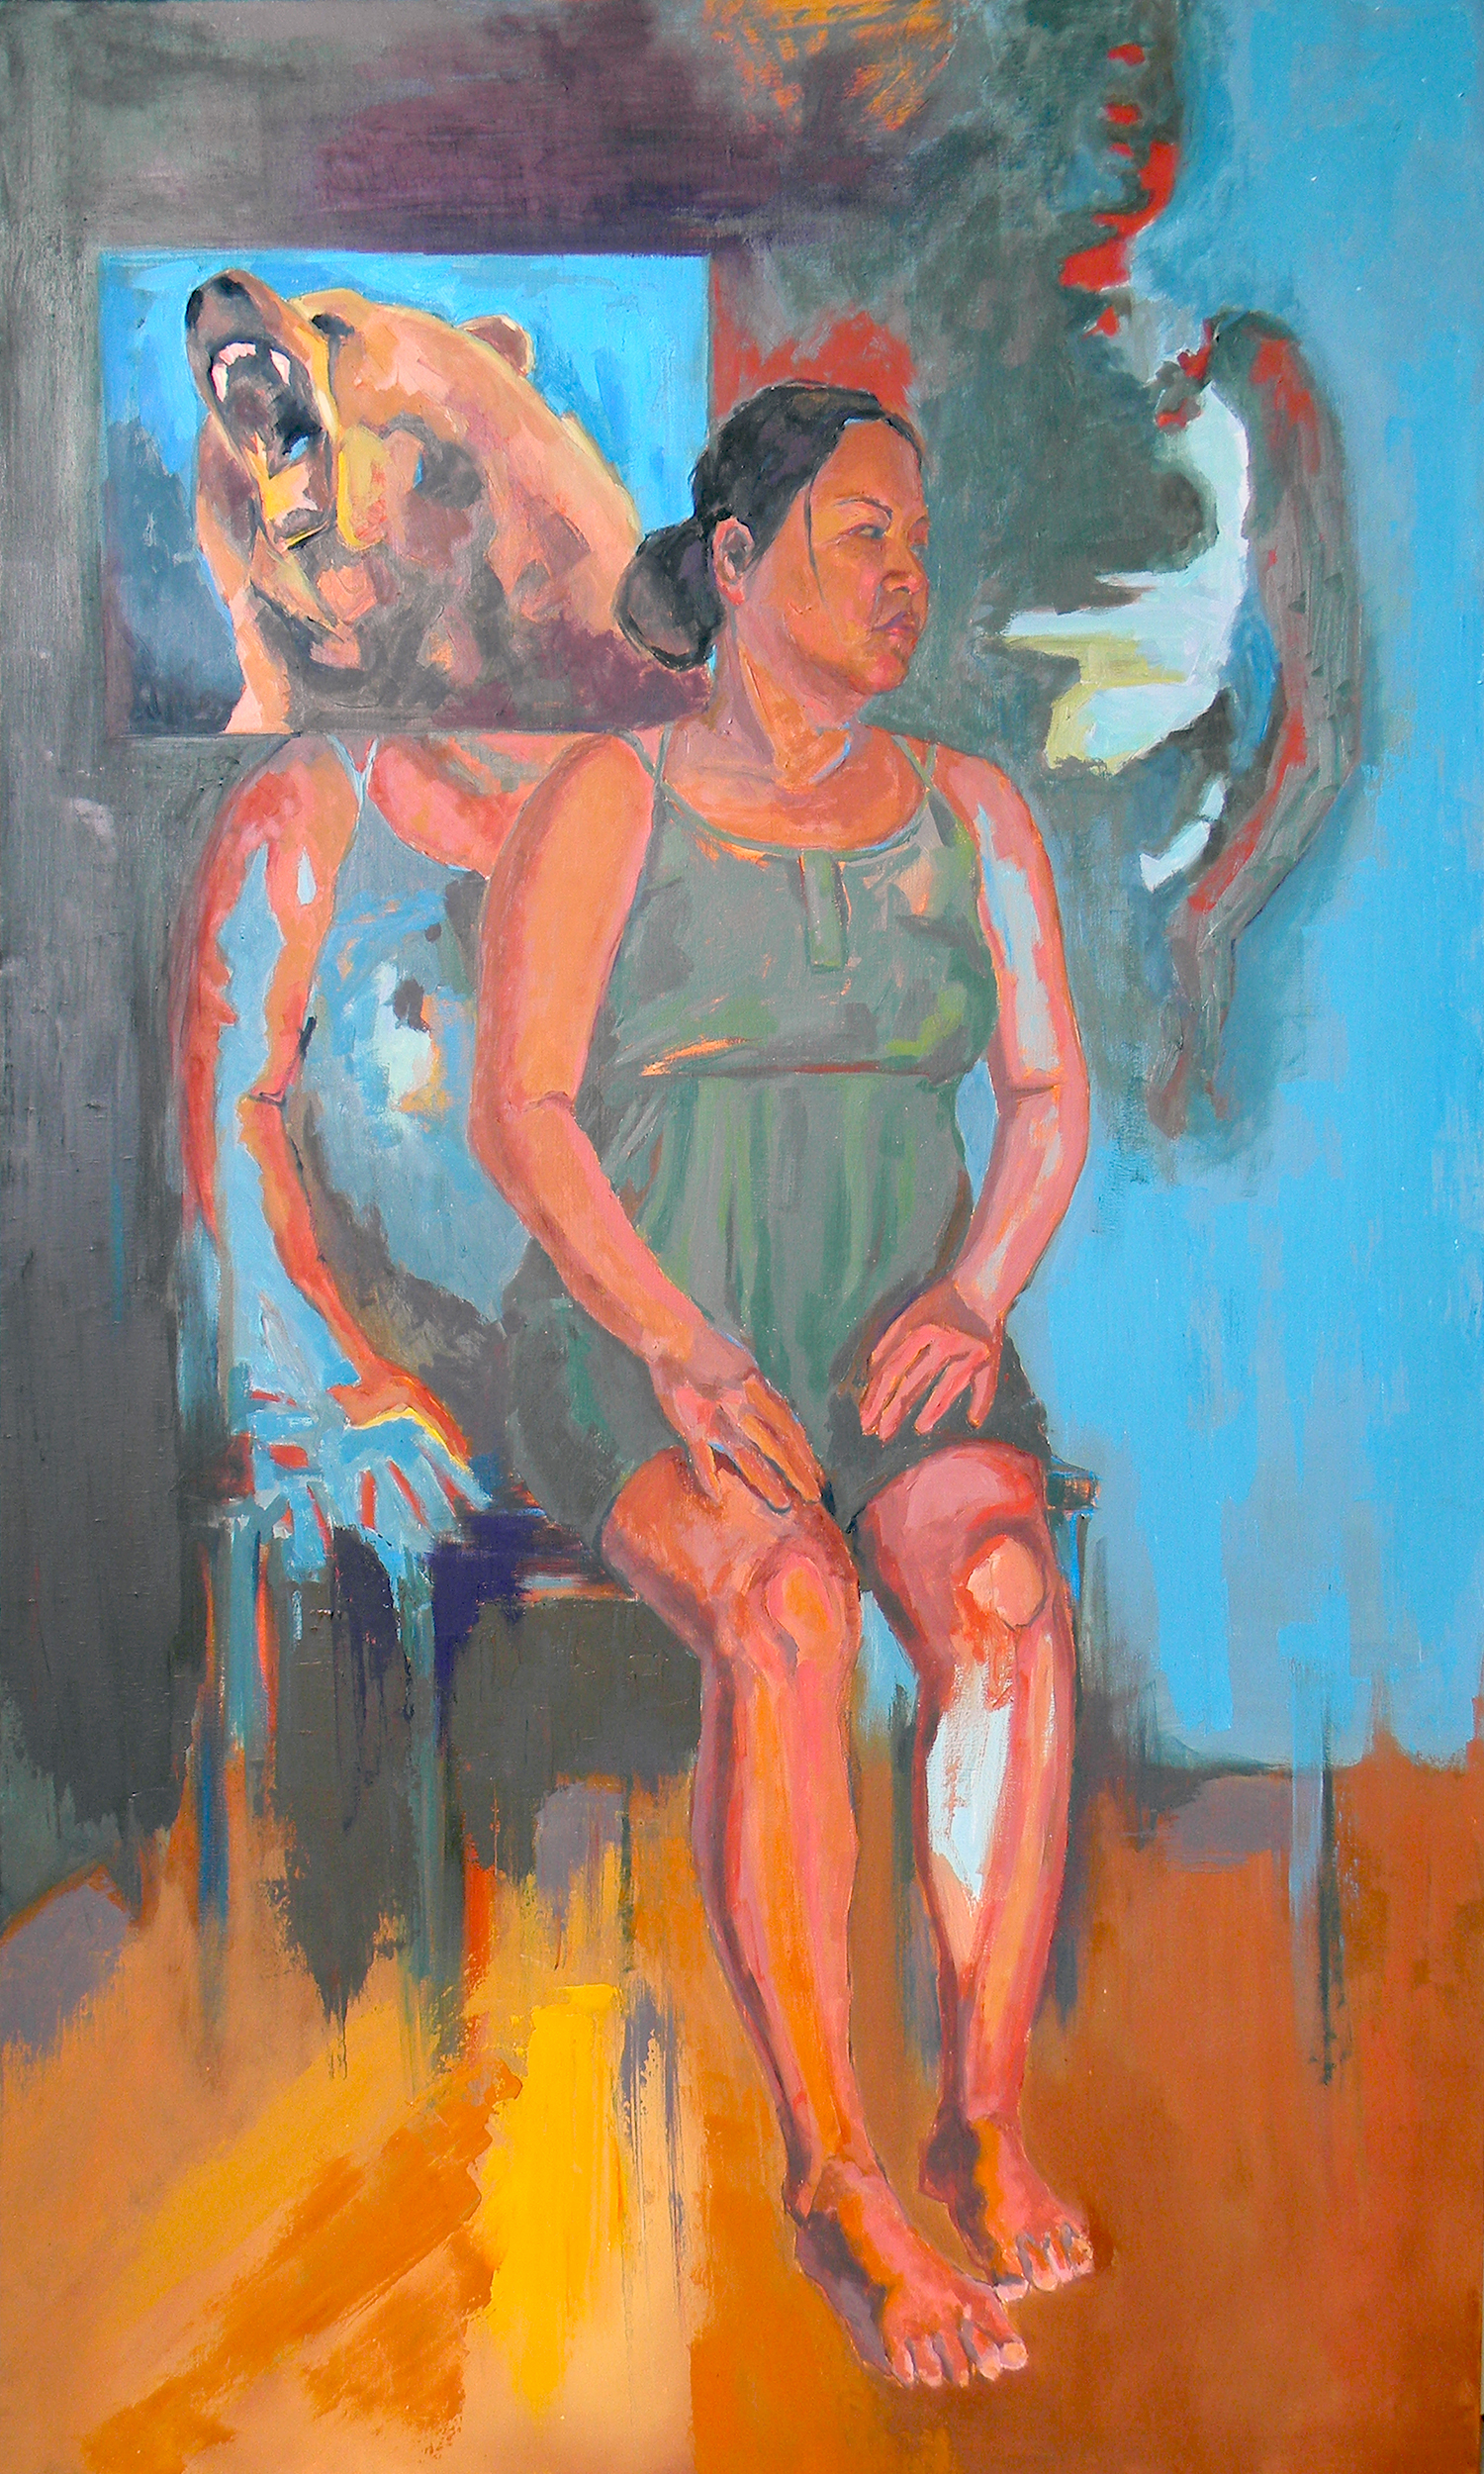 Diane Williams, Uncertainties, 2014. Oil on canvas 36 x 60 in.